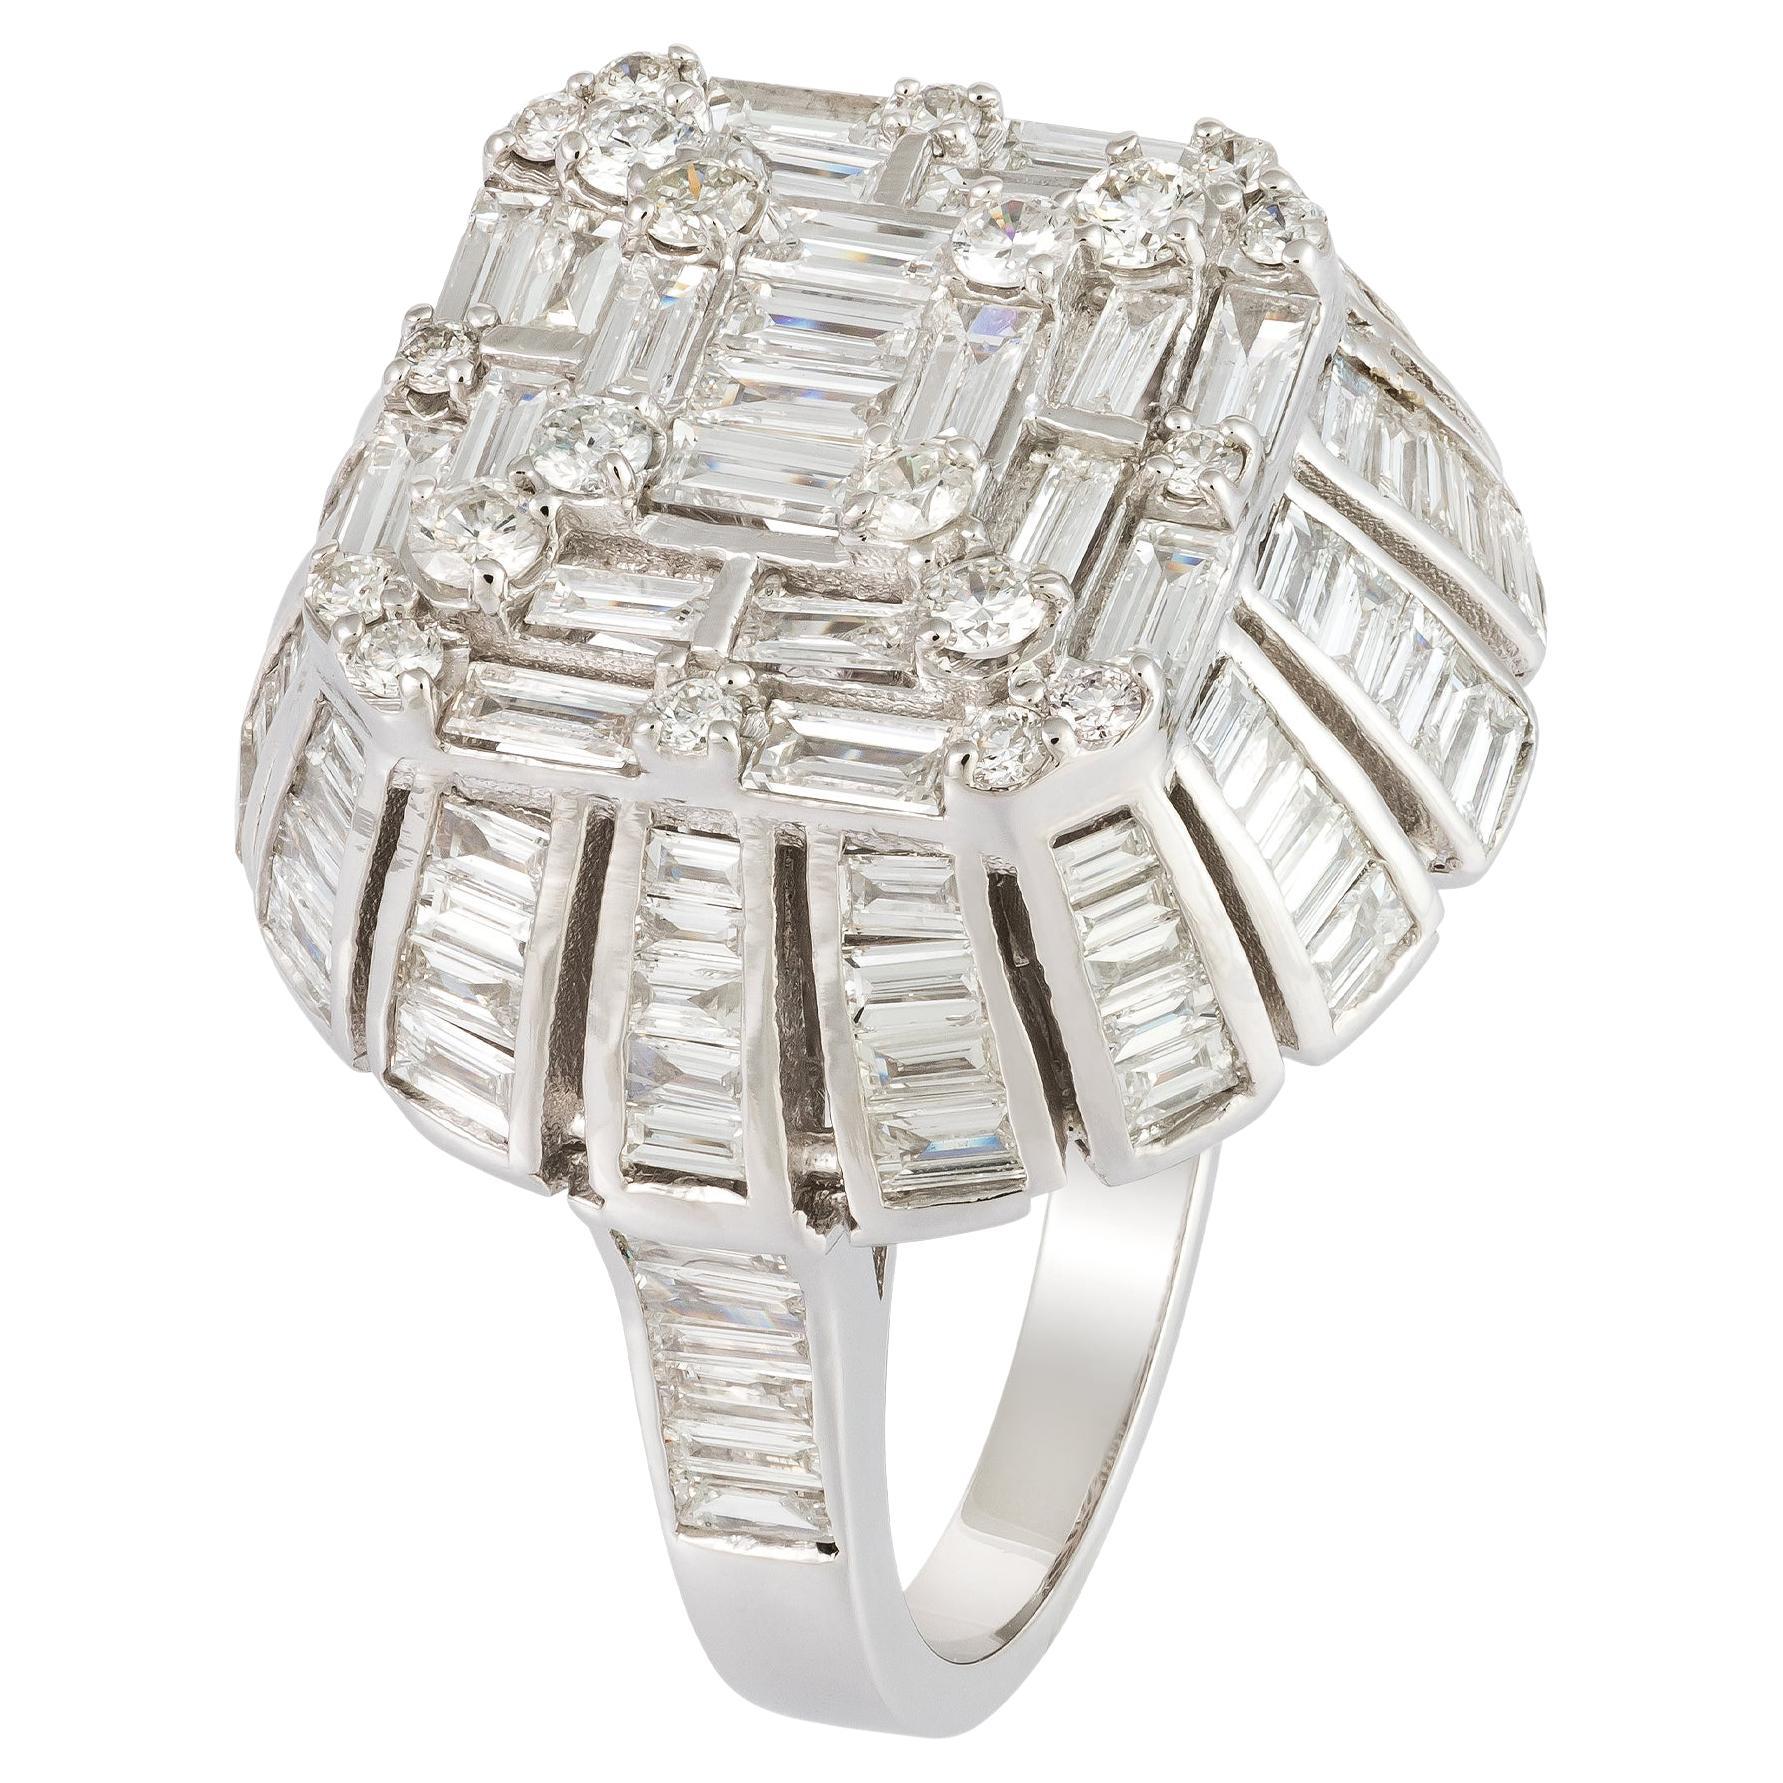 Unique White 18K Gold White Diamond Ring for Her